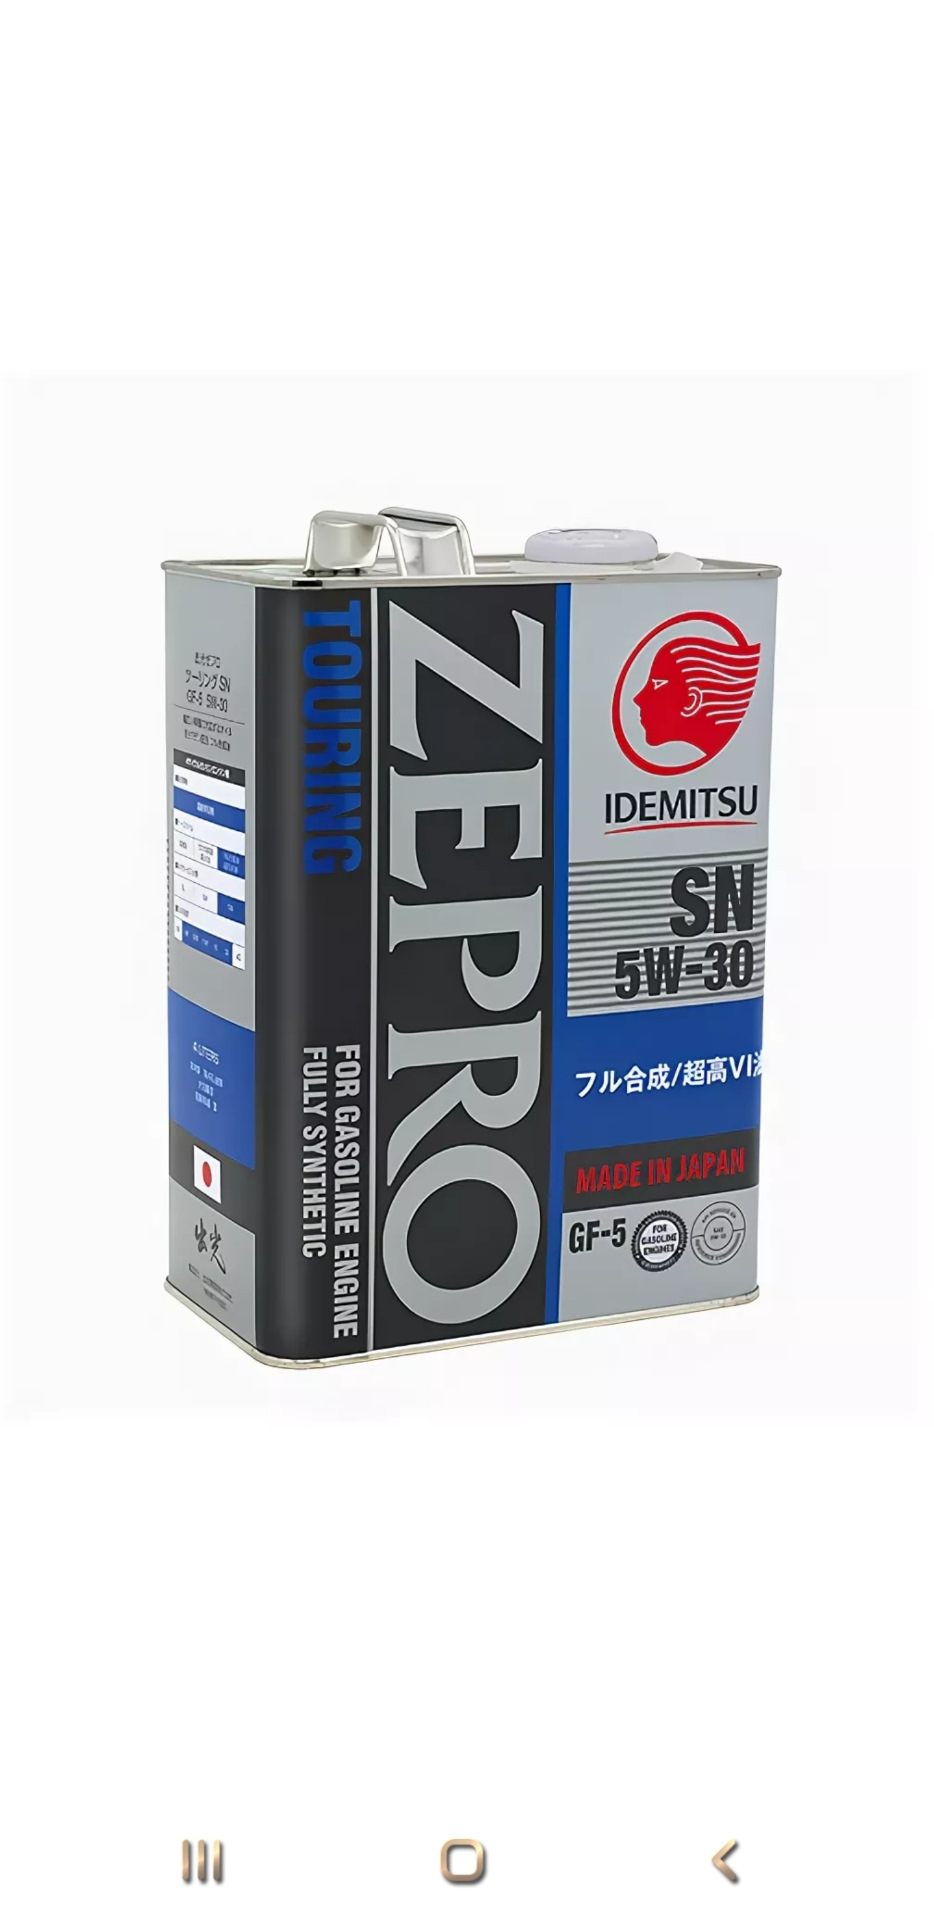 Zepro масло 5w 30